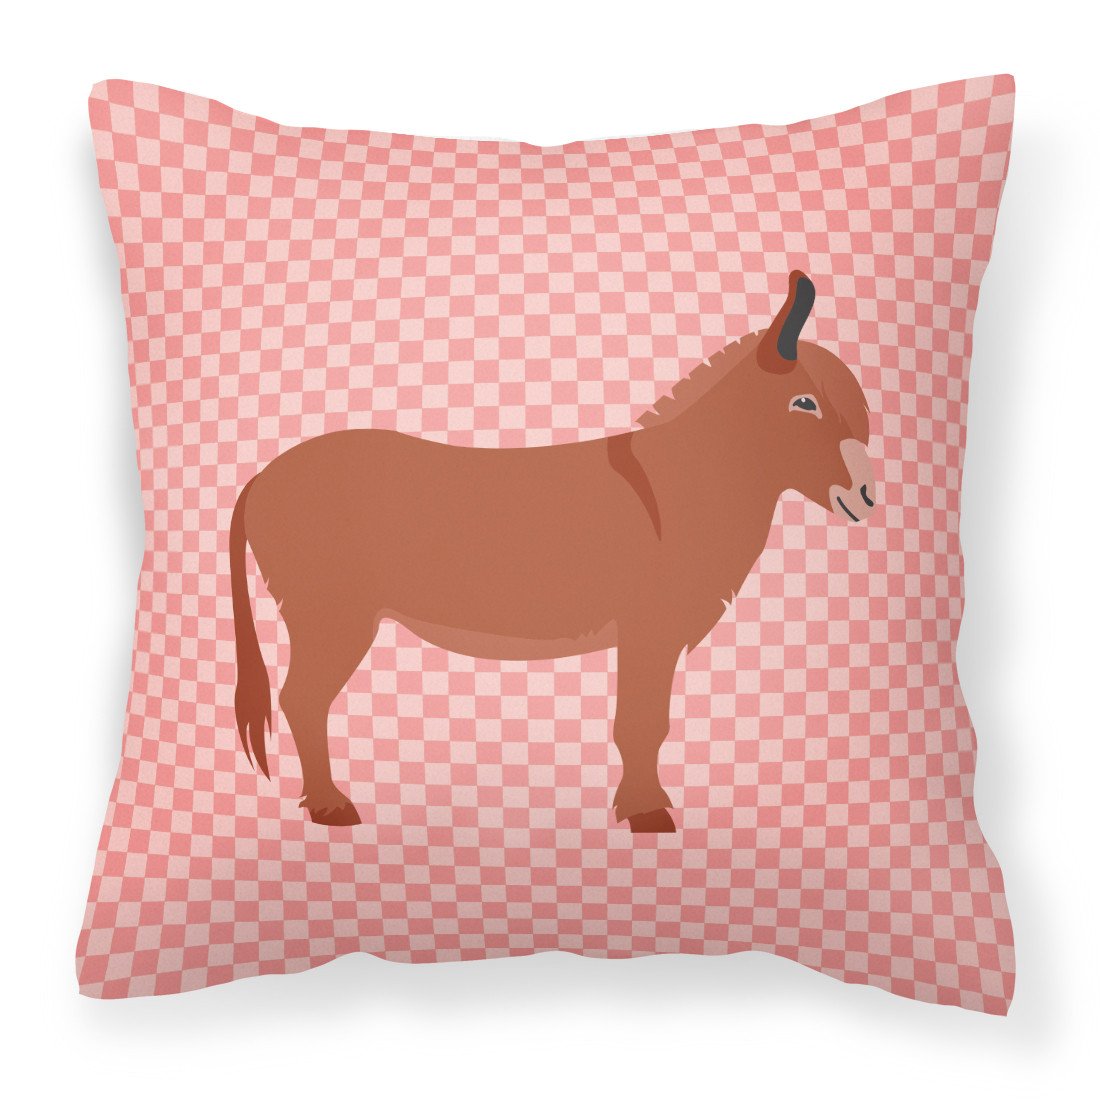 Irish Donkey Pink Check Fabric Decorative Pillow BB7848PW1818 by Caroline's Treasures